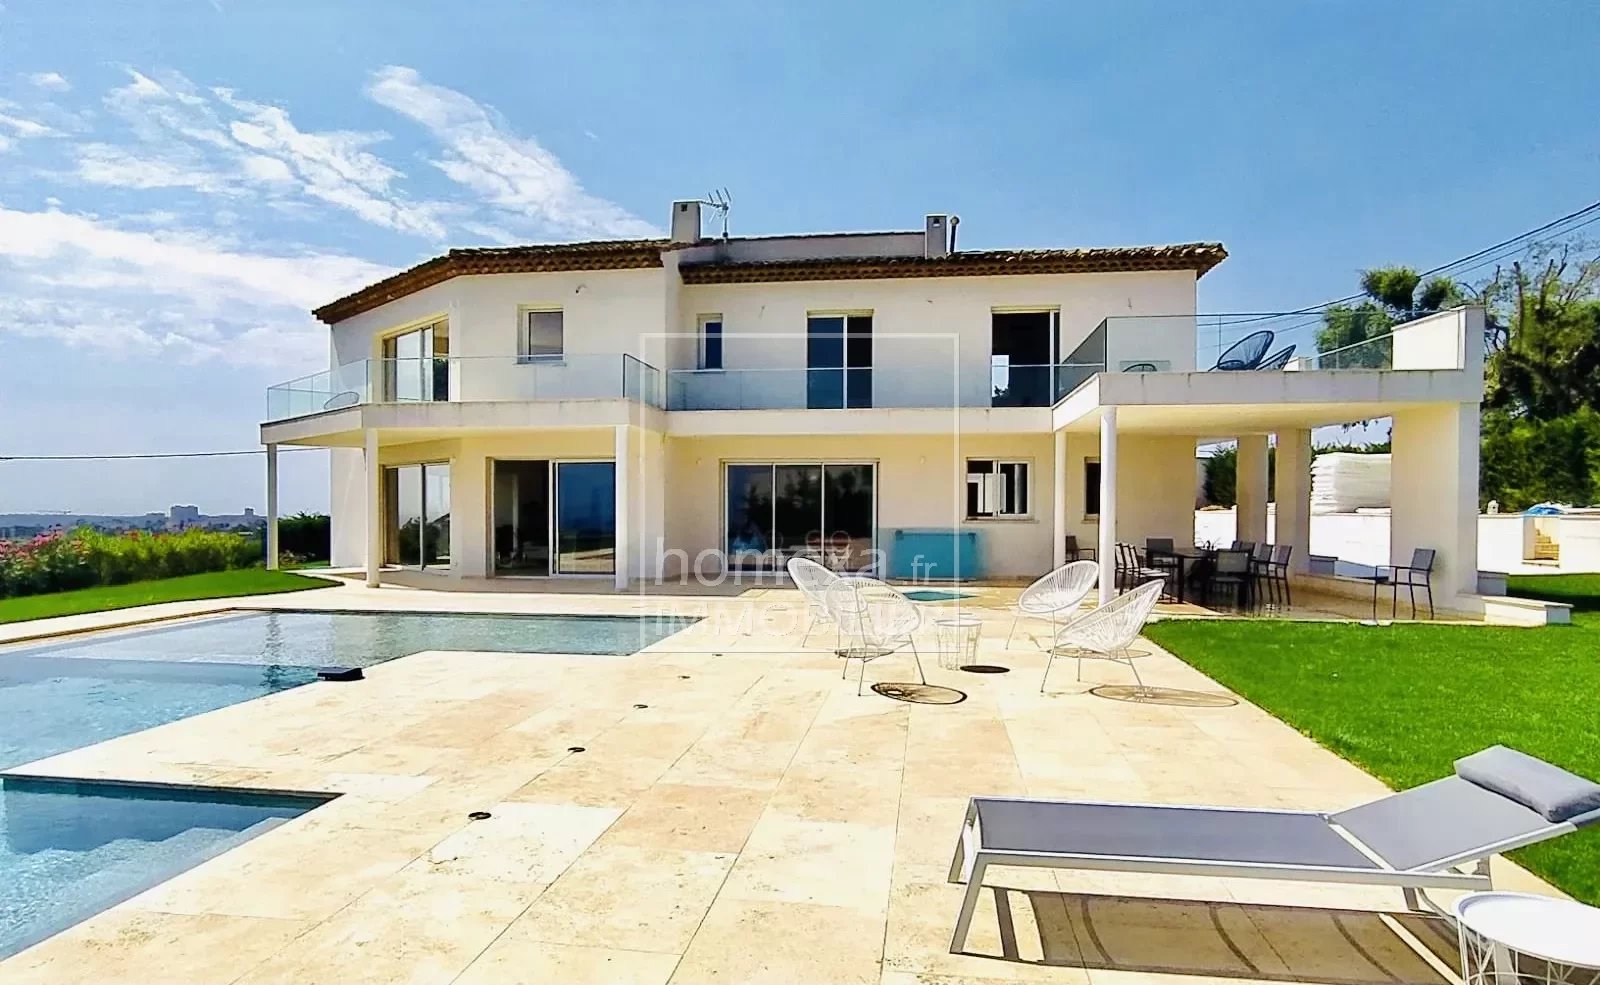 Luxury panoramic sea view villa in Antibes